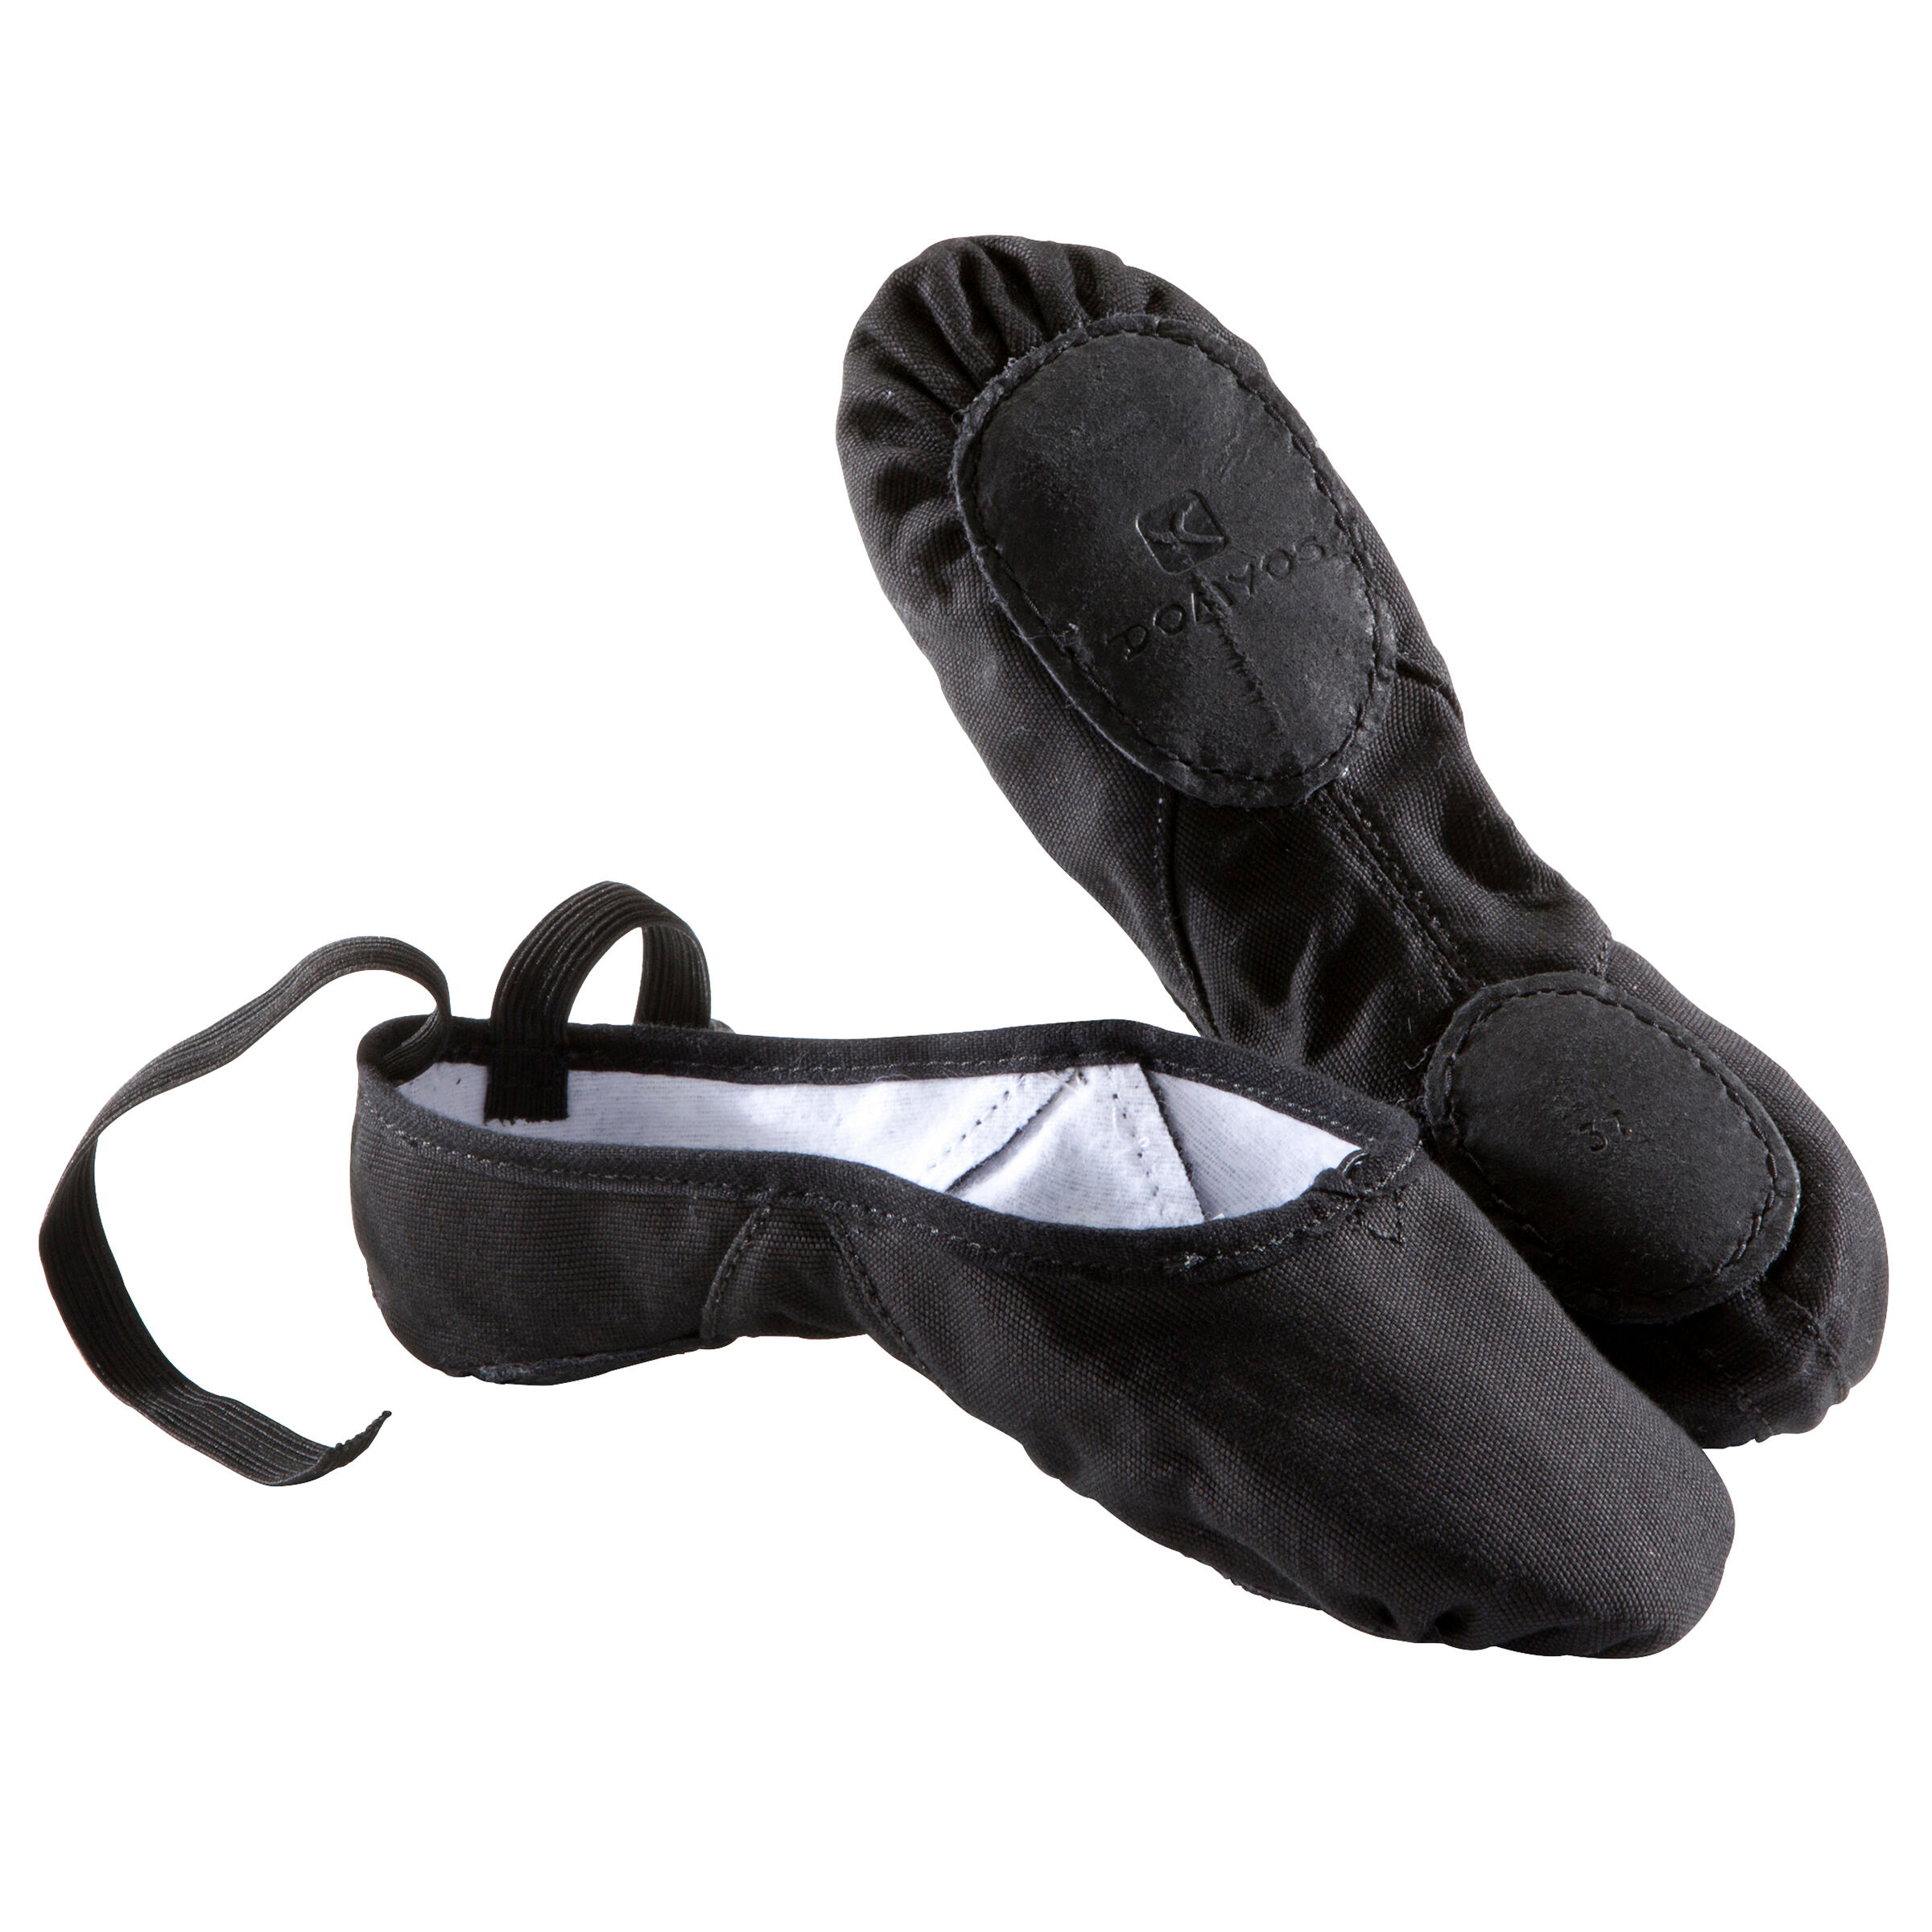 decathlon pointe shoes